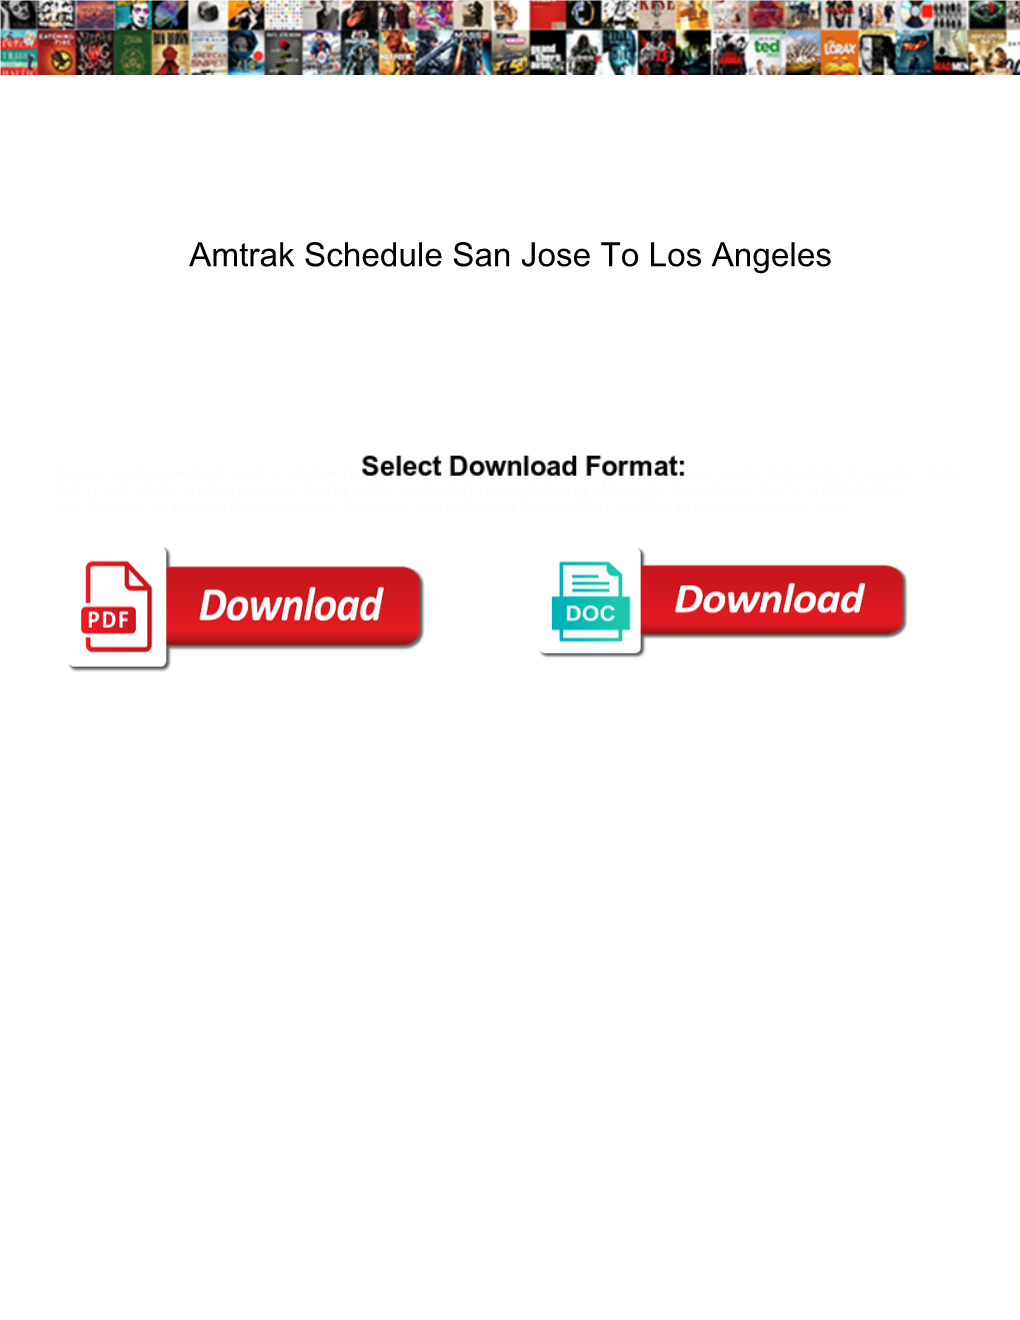 Amtrak Schedule San Jose to Los Angeles